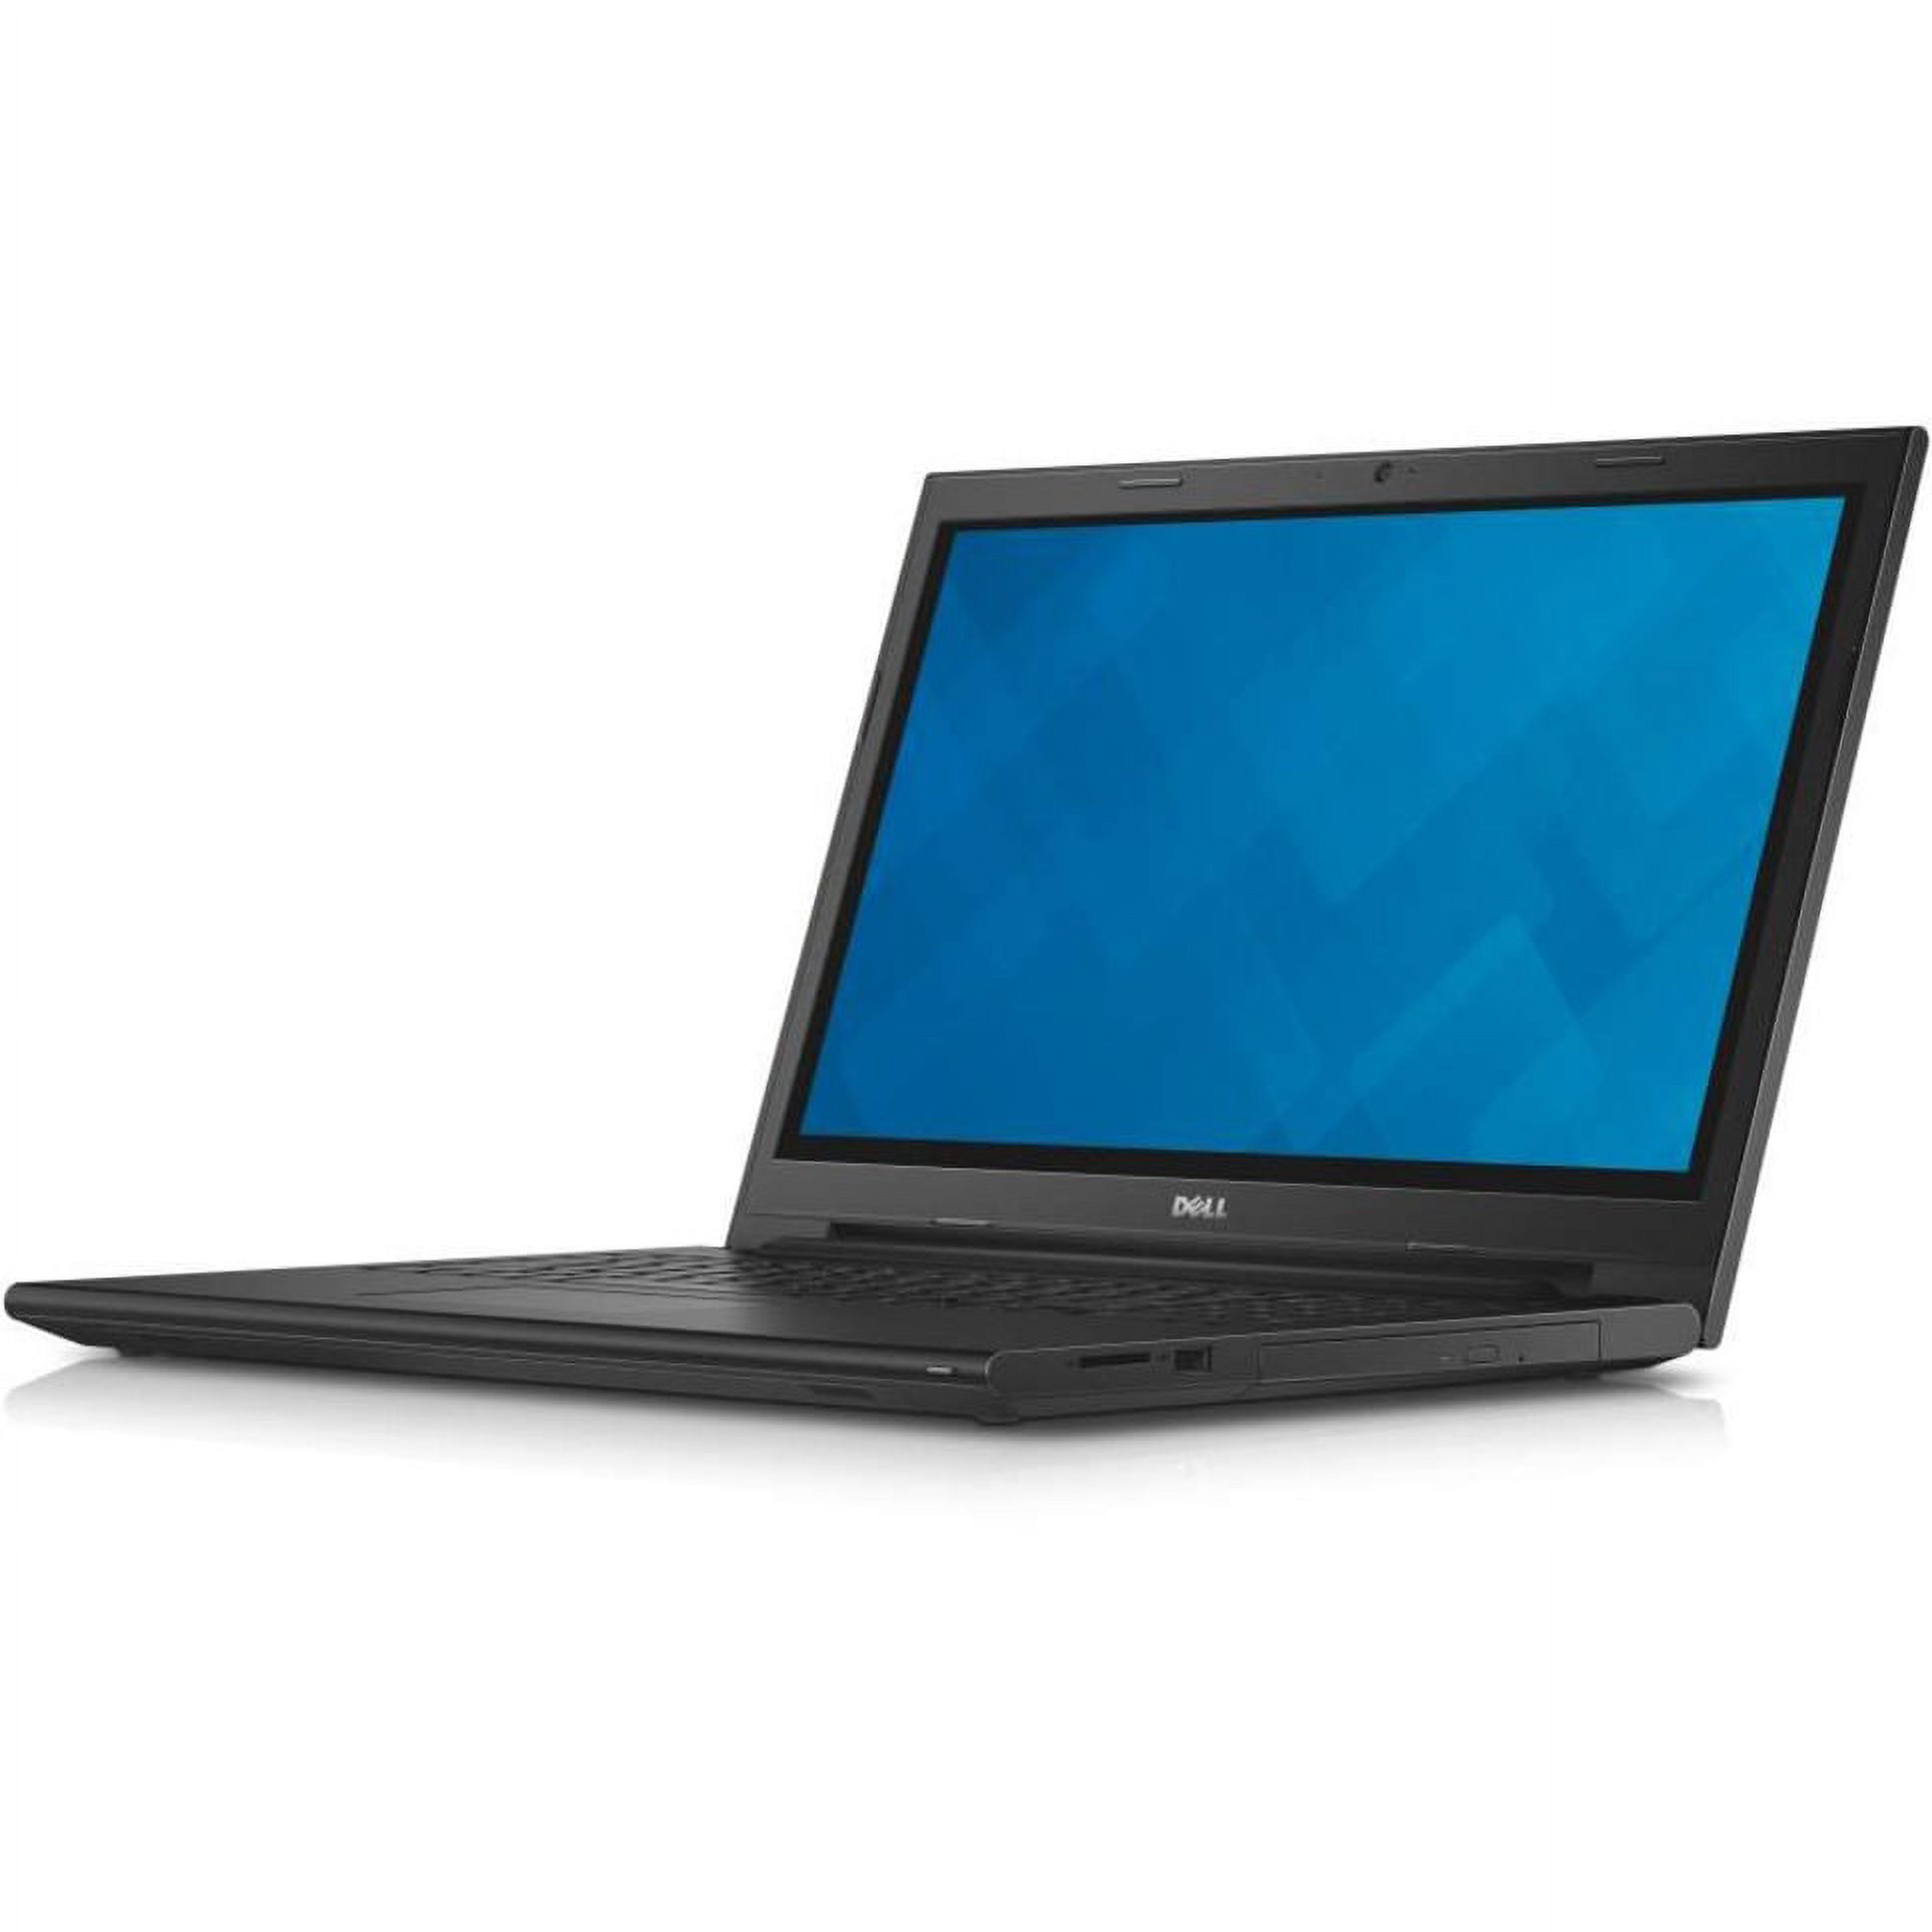 Dell Inspiron 15.6" Laptop, Intel Core i3 i3-4030U, 4GB RAM, 1TB HD, Windows 8.1, i3542-3267BK - image 1 of 3